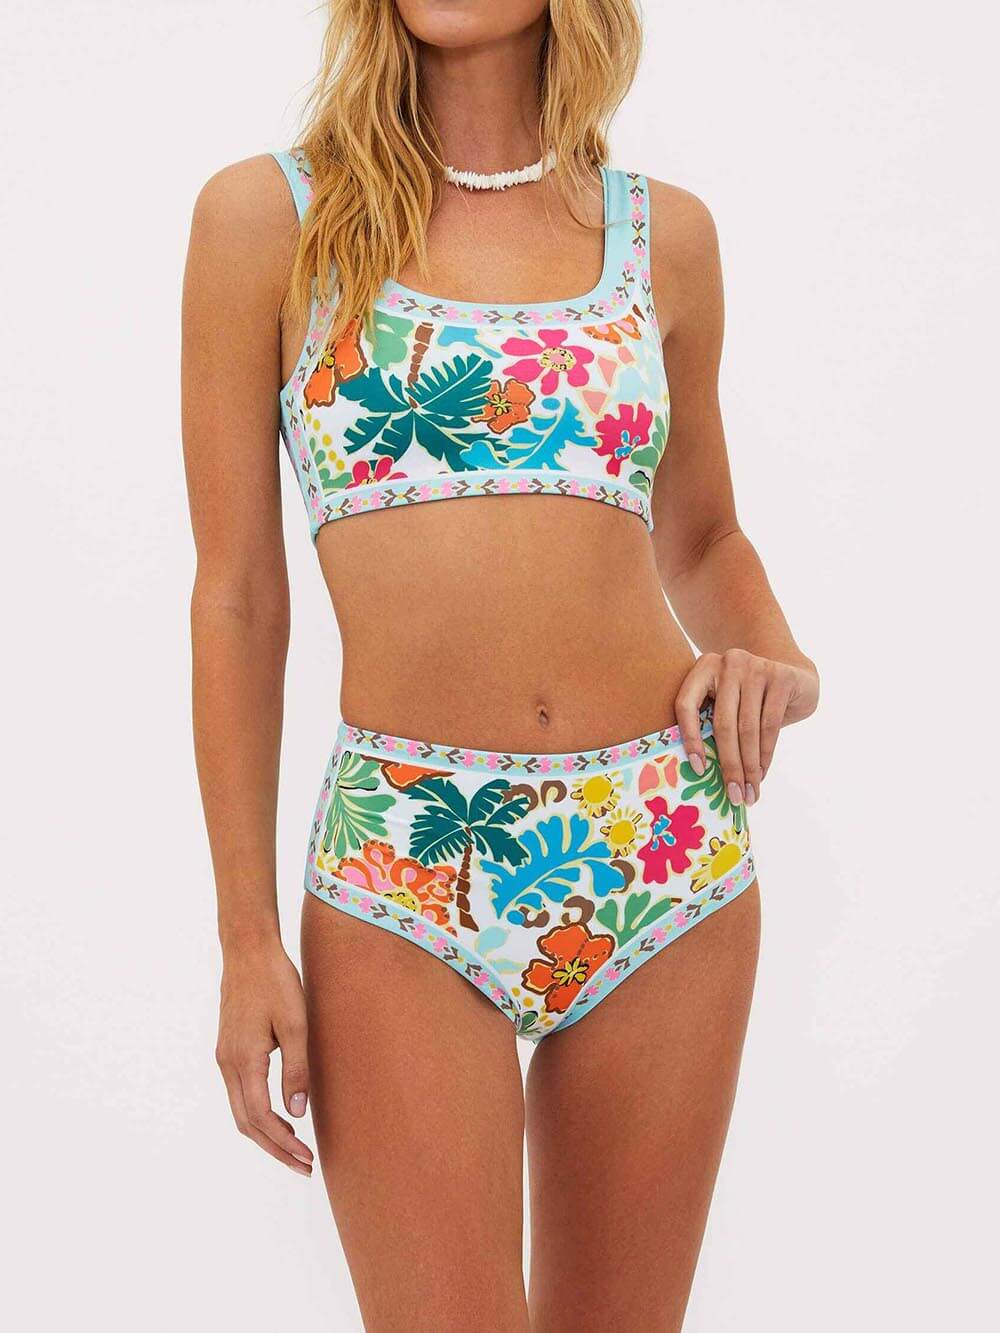 Eenzegaarteg Floral Print Stretch Bikini Swimsuit